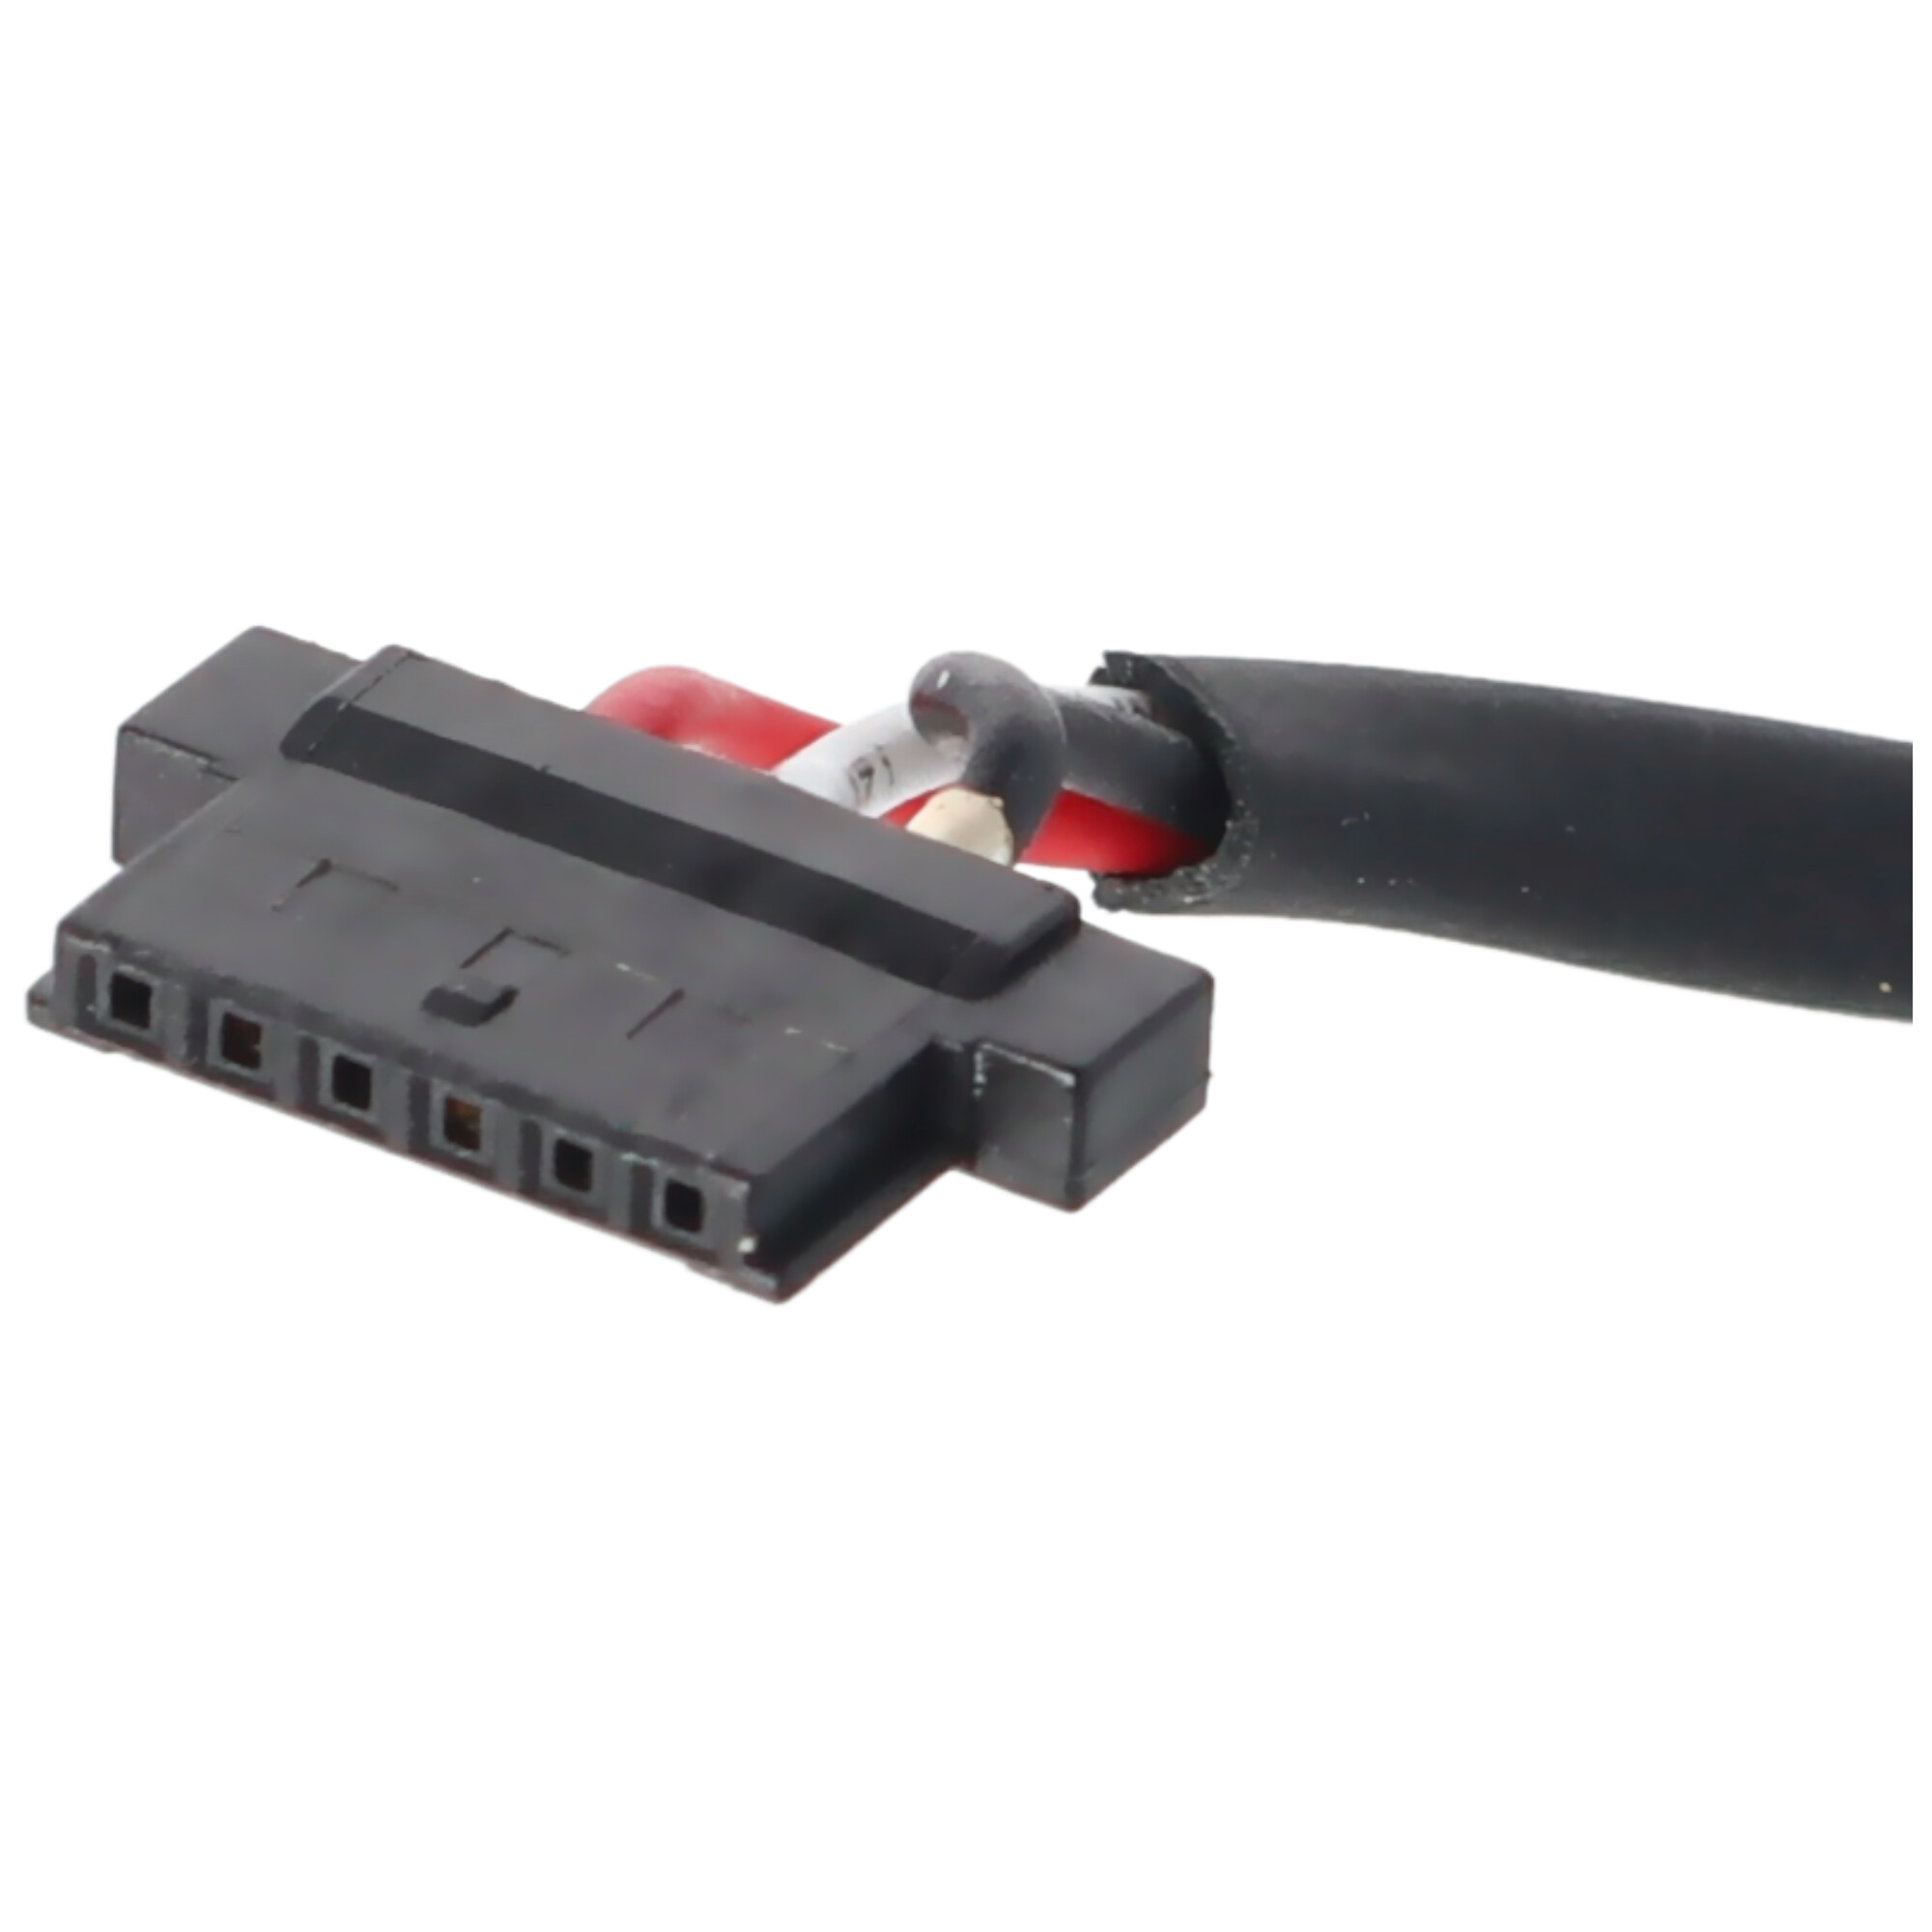 USB Kabel für Becker Ready 50 ICE Ready 70 LMU revo.2 Ladekabel 1A weiß